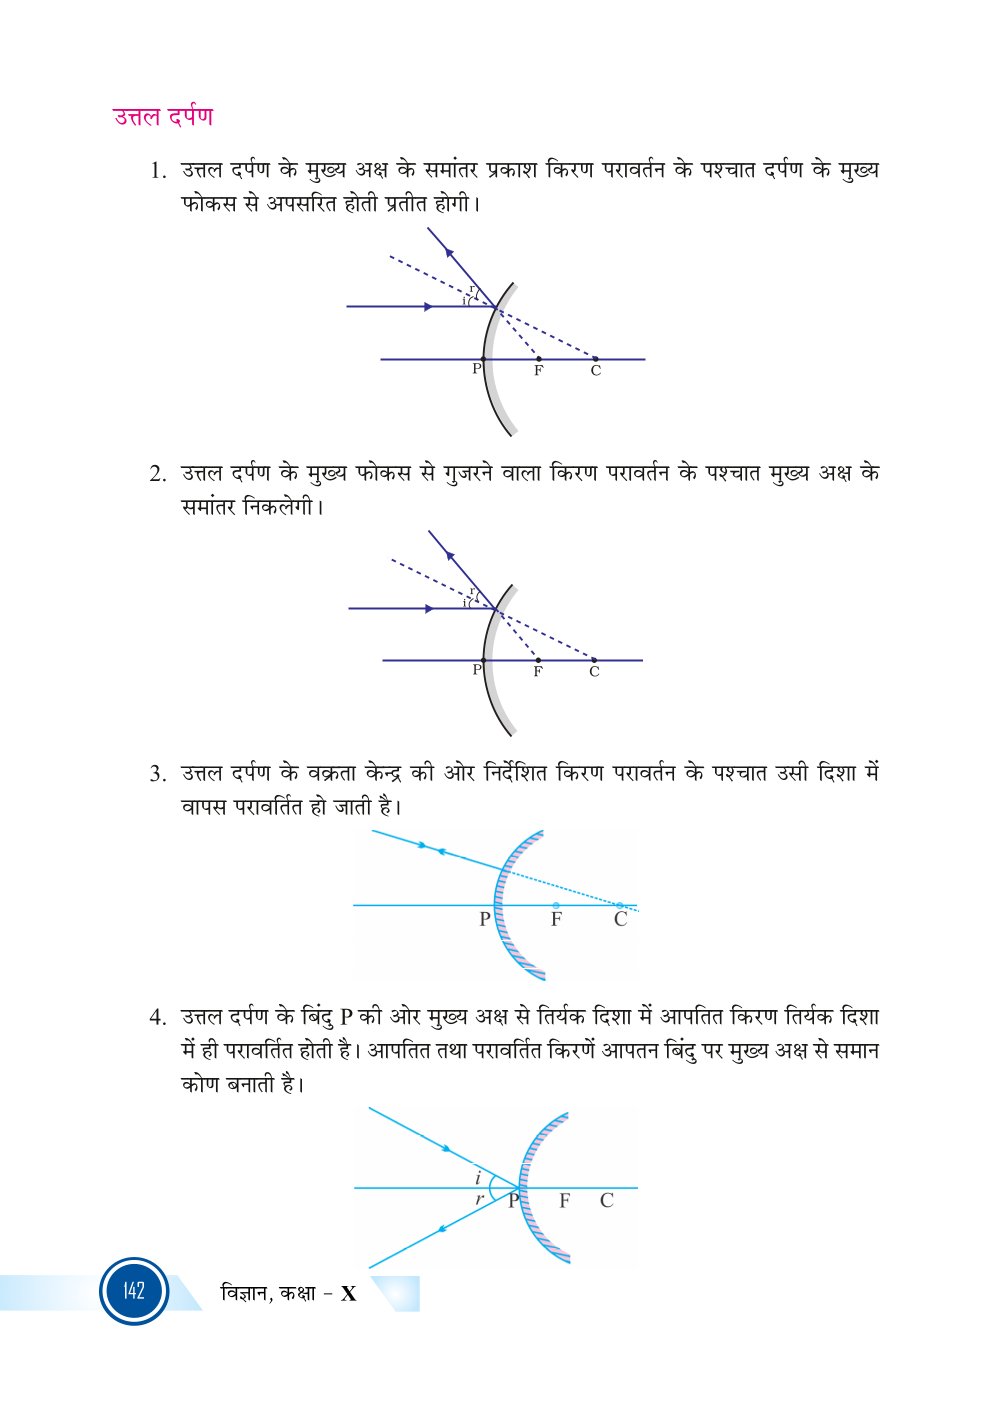 Bihar Board Class 10th Physics | Light Refraction and Reflection | Class 10 Physics Rivision Notes PDF | प्रकाश अपवर्तन तथा परवर्तन | बिहार बोर्ड क्लास 10वीं भौतिकी नोट्स | कक्षा 10 भौतिकी हिंदी में नोट्स